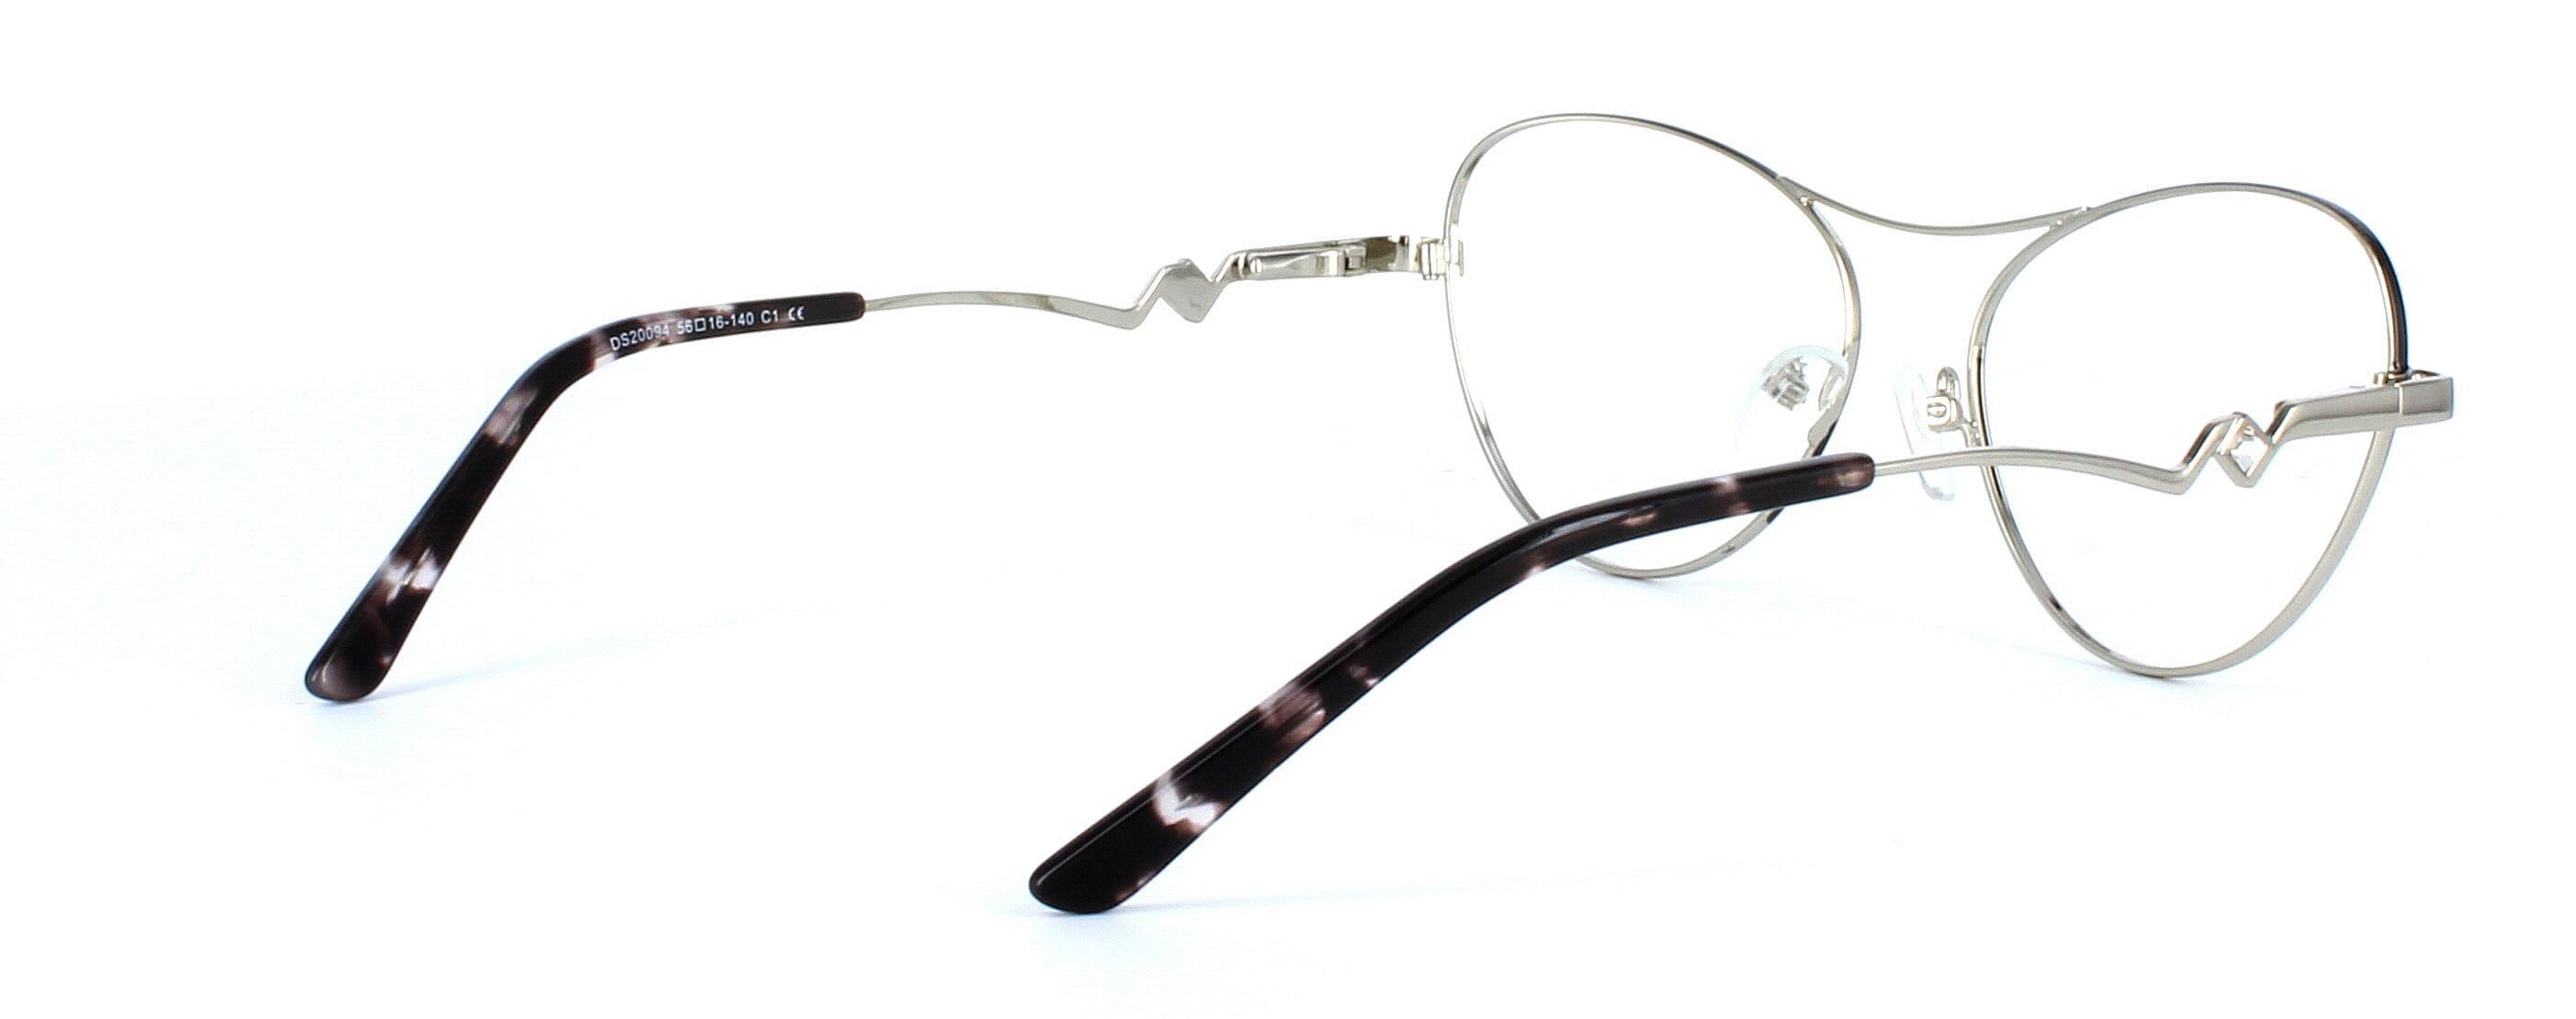 Auriga - Ladies 2-tone black & silver metal glasses - image view 4